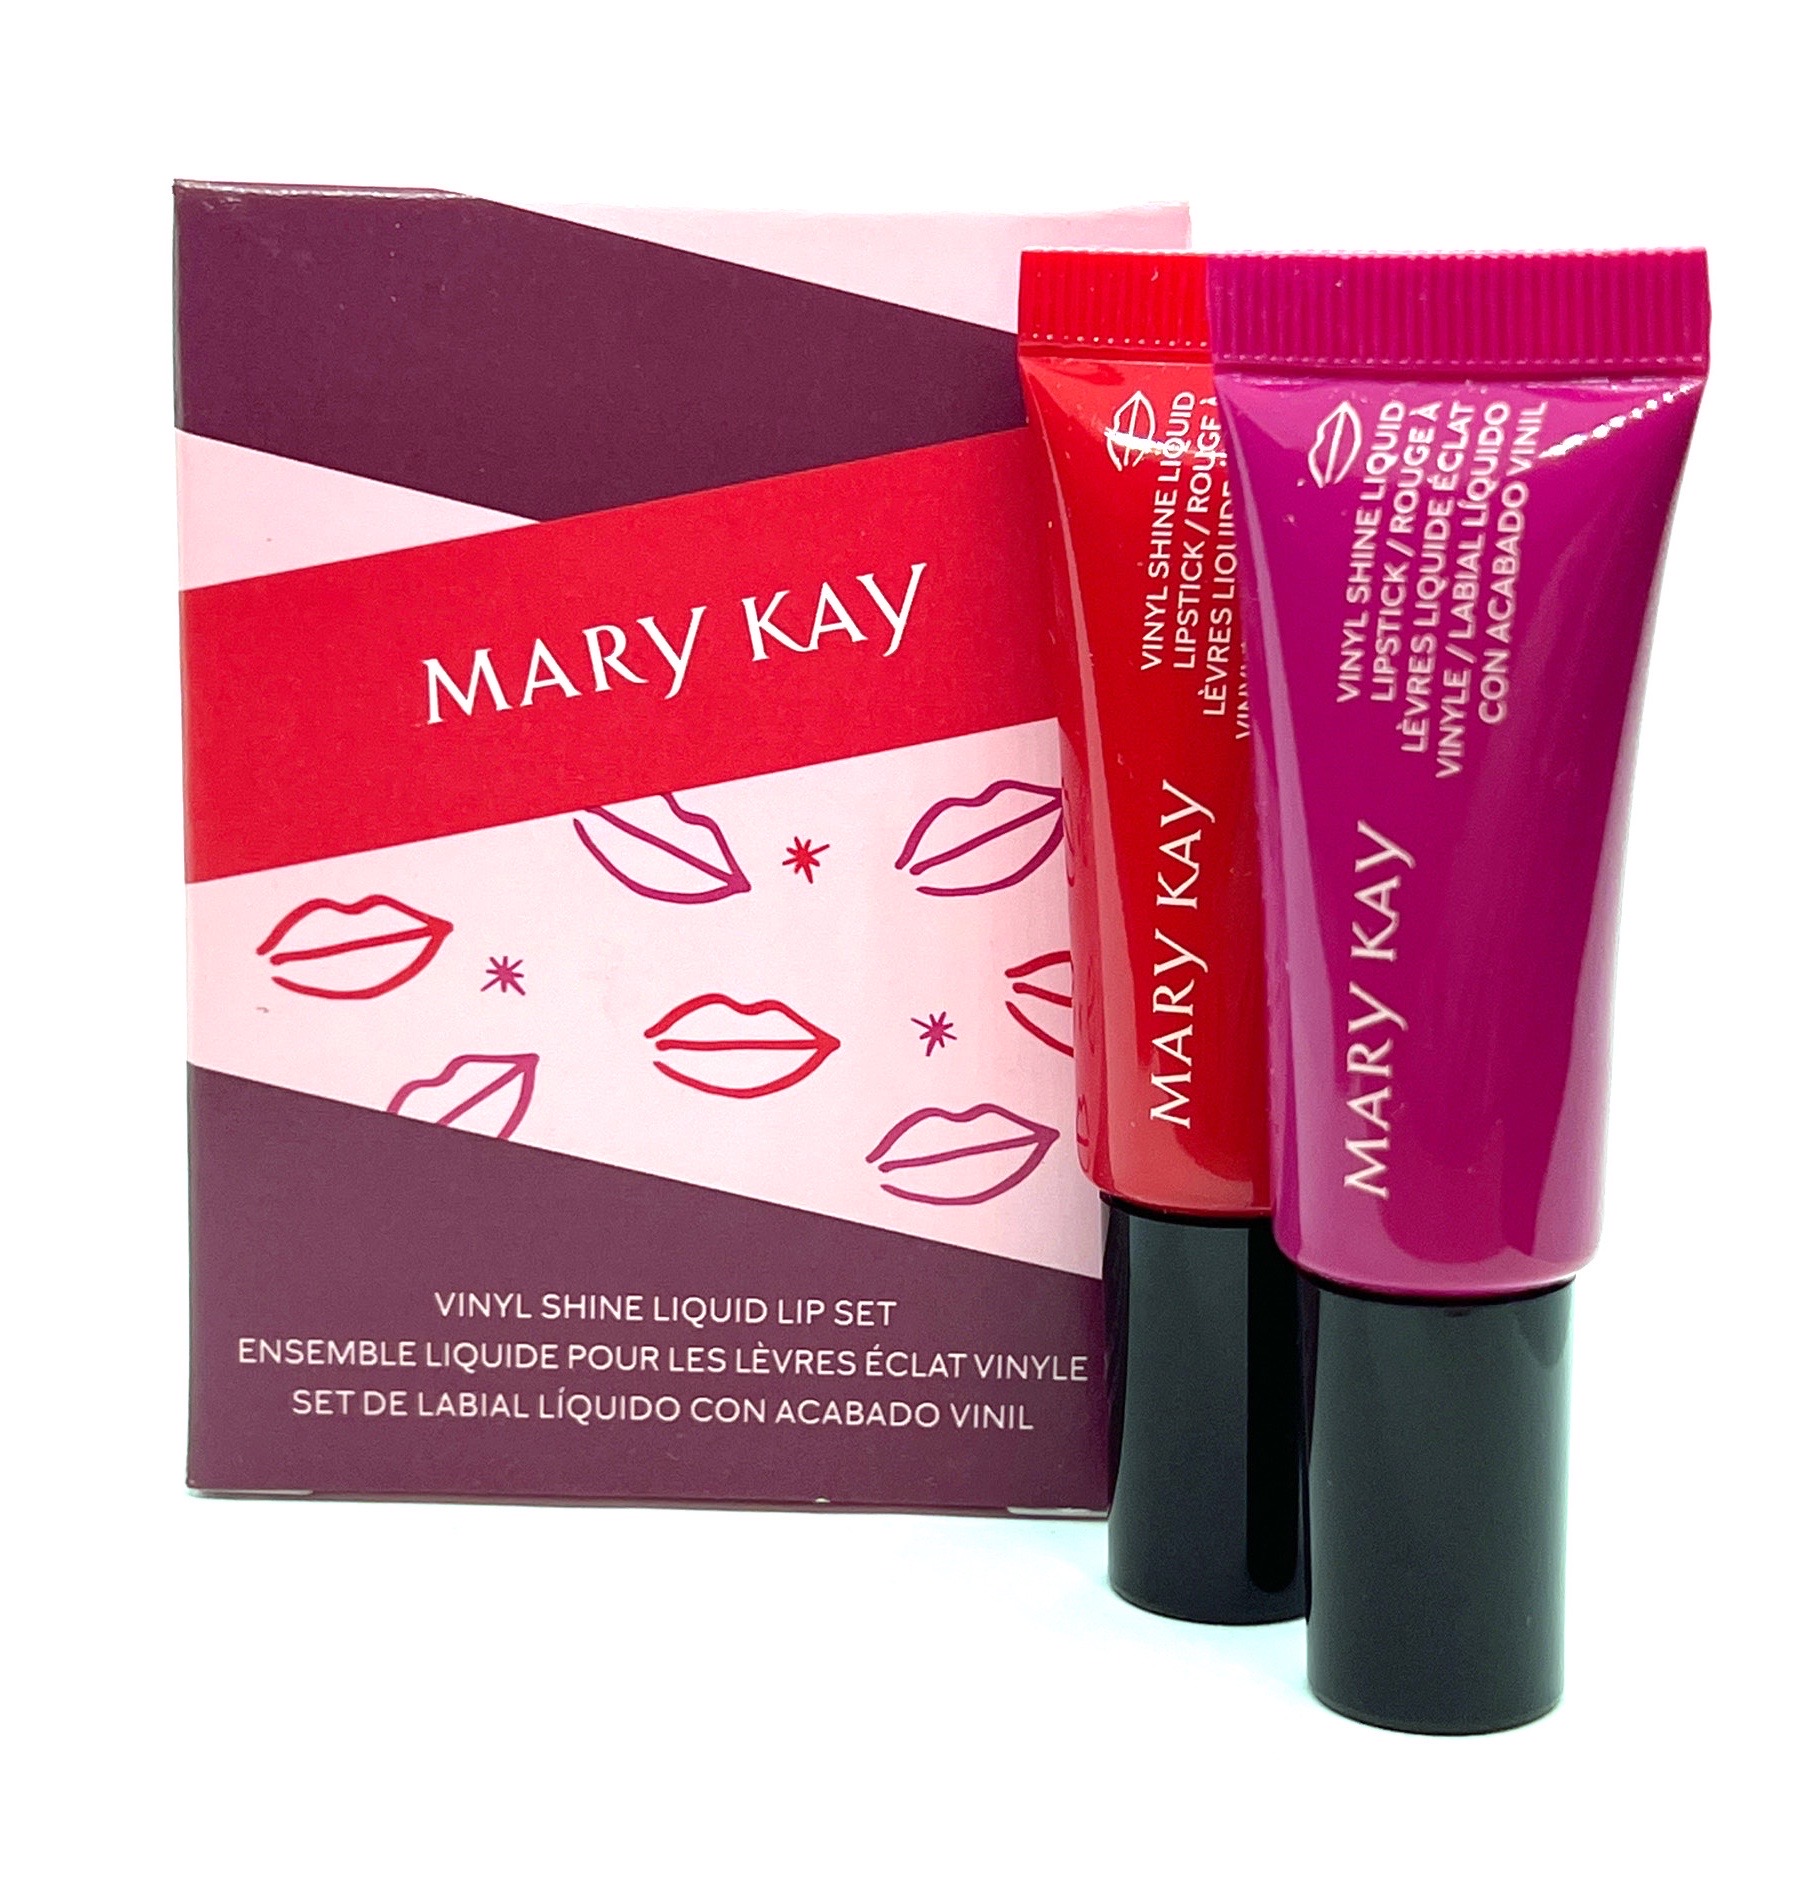 Discontinued or Limited :: Mary Kay Vinyl Shine Liquid Set ~ Luminous Red & Vivid Berry (Limited Edition 2022) - Mary Kay Cosmetics